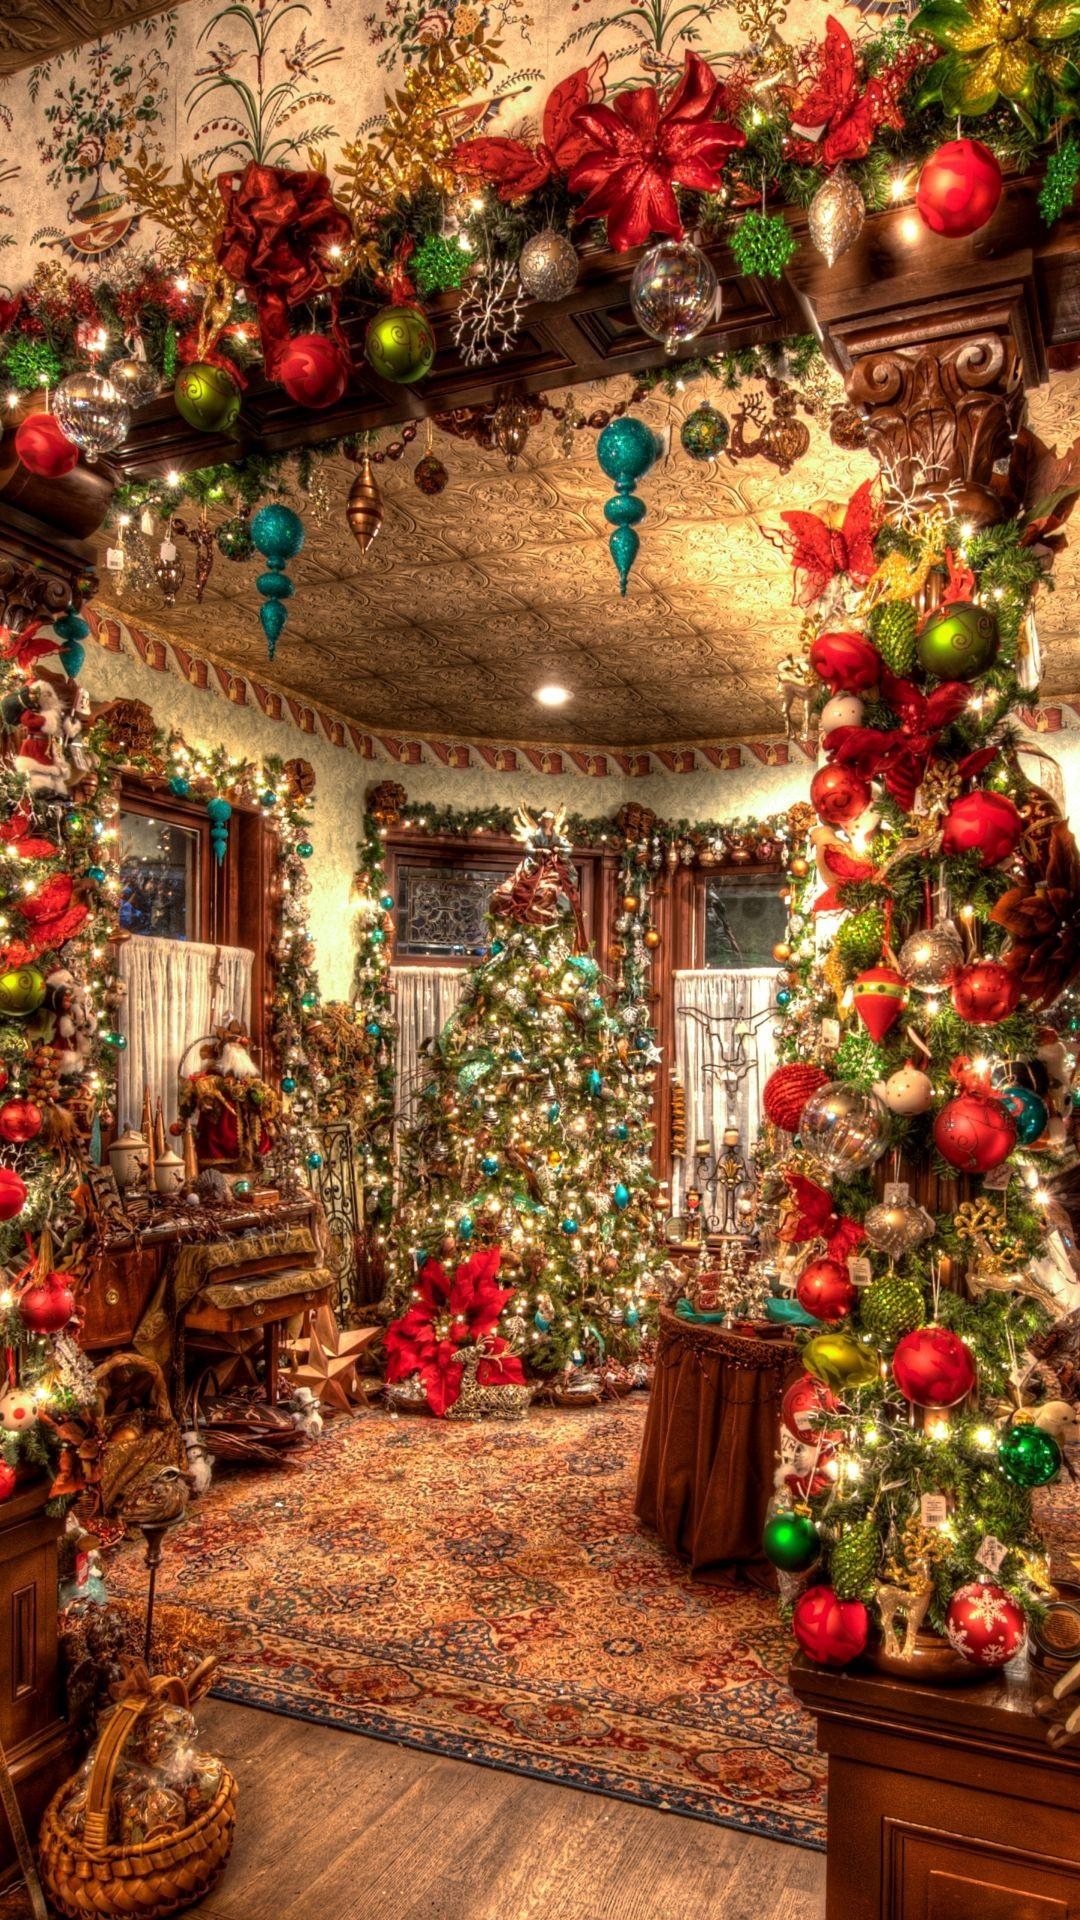 Download wallpaper 1080x1920 holiday, christmas, ornaments